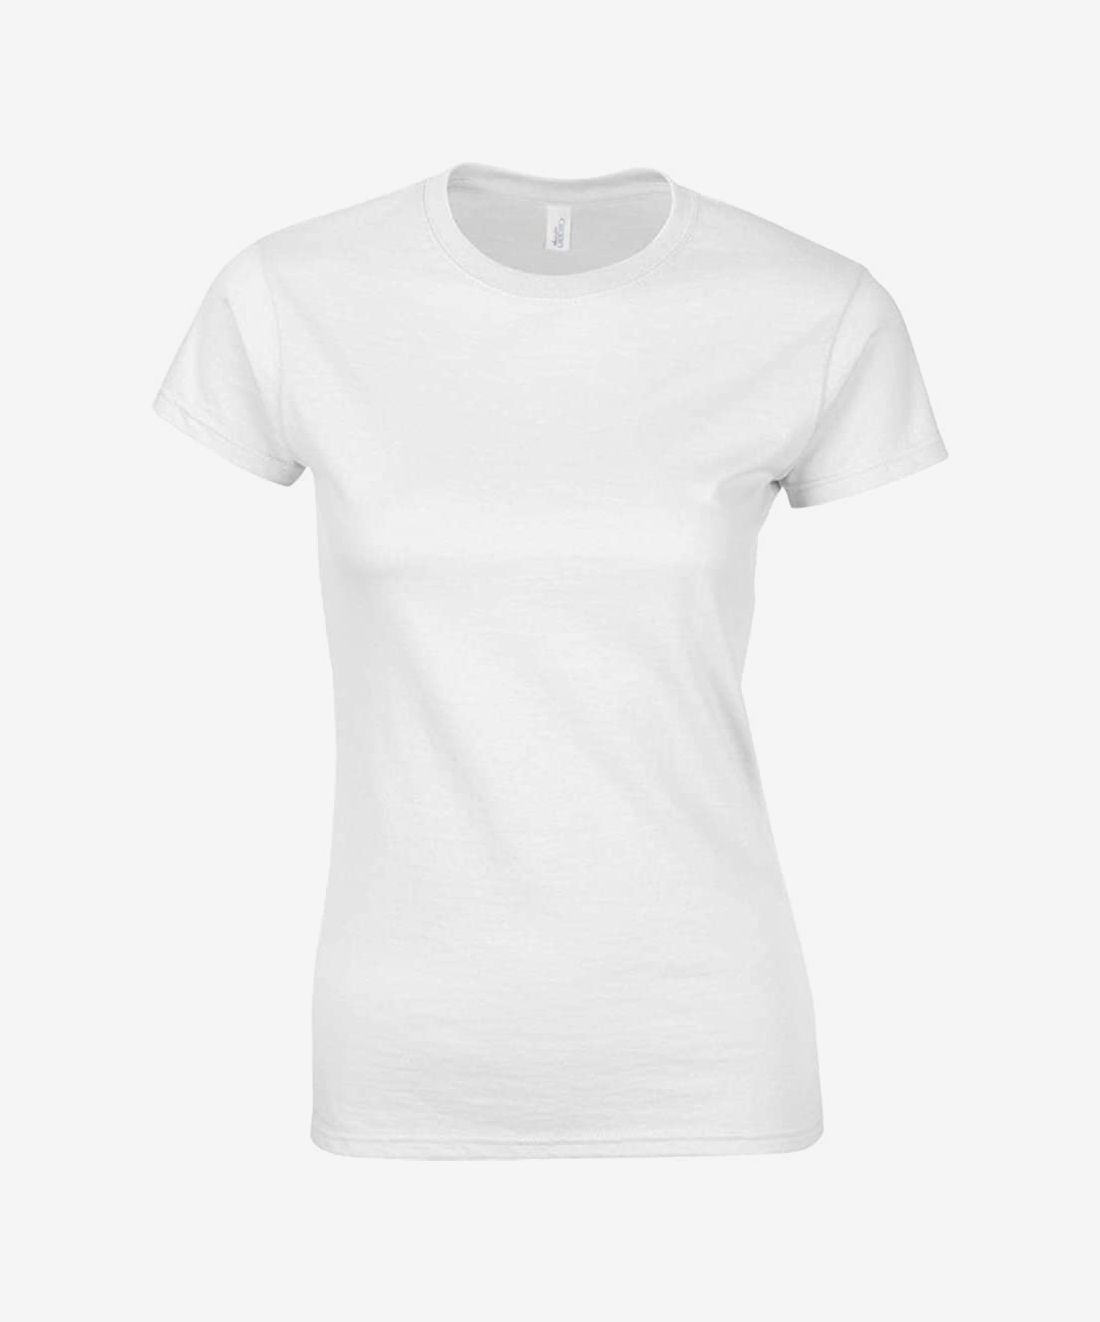 ladies plain white t shirt